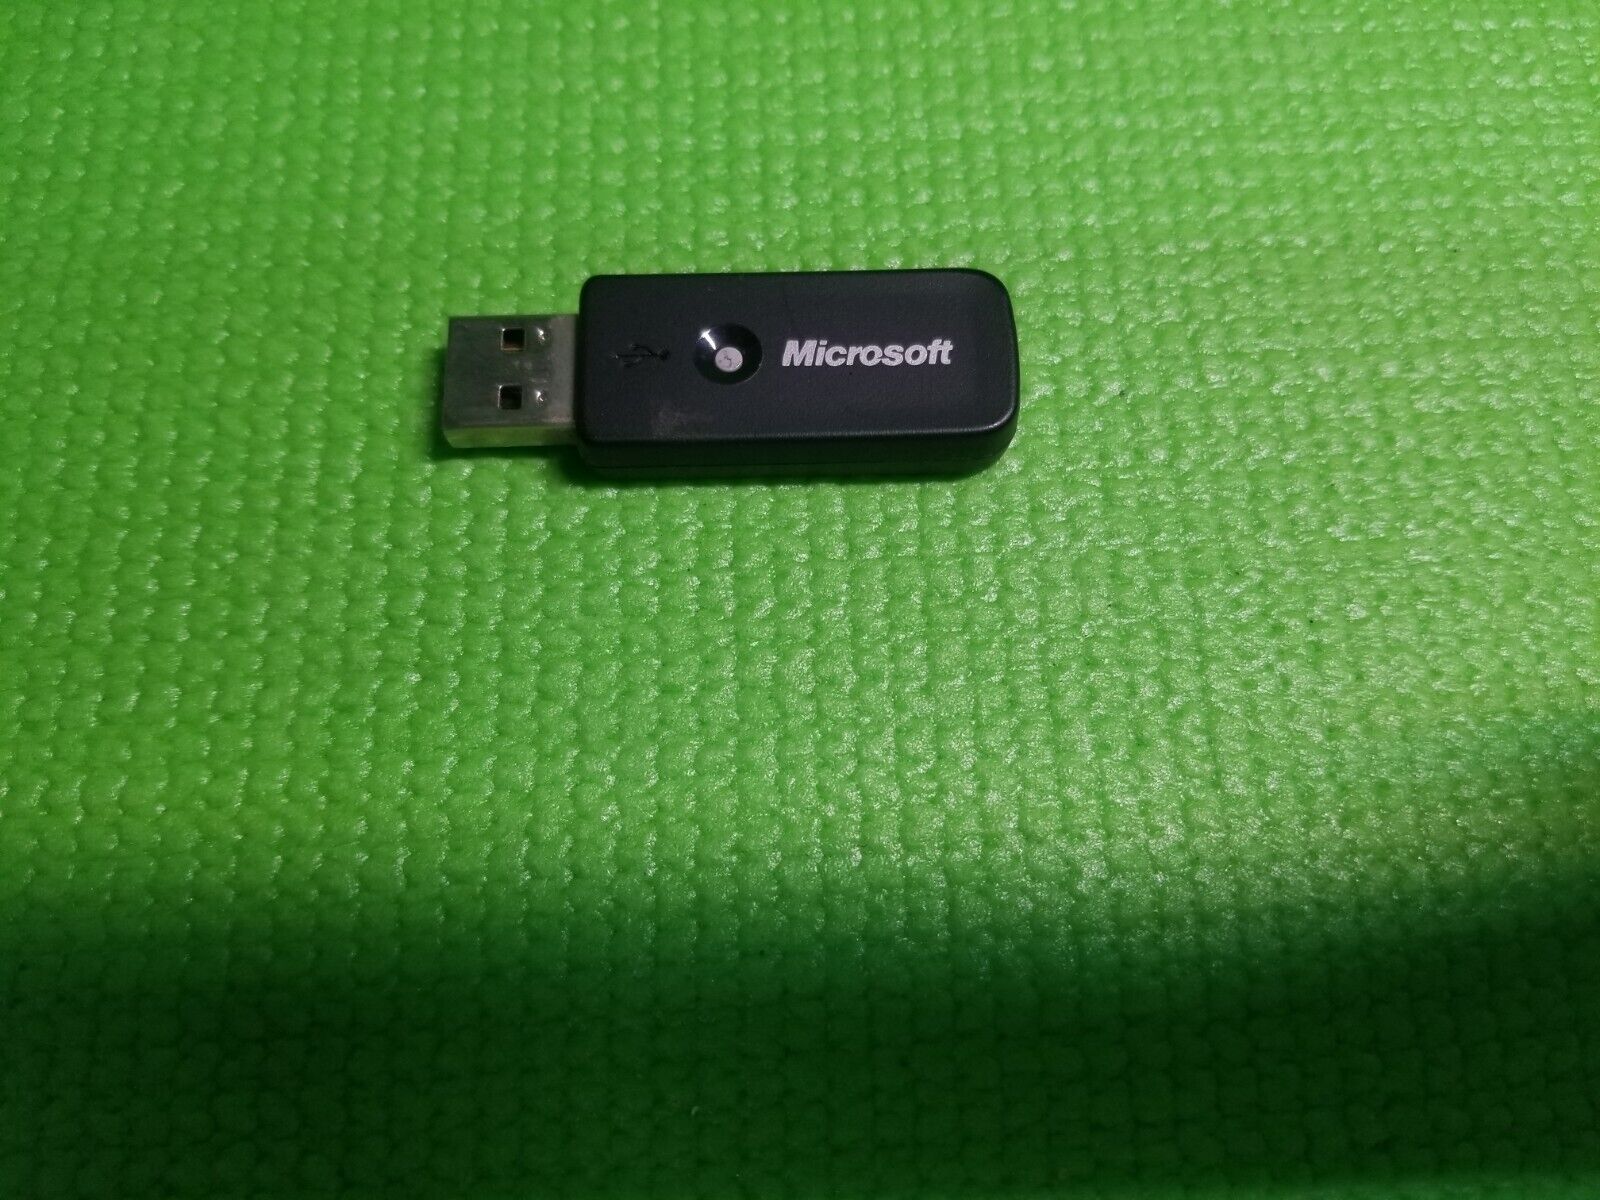 Microsoft Wireless Transceiver V3.0 1063 Bluetooth USB Dongle Receiver